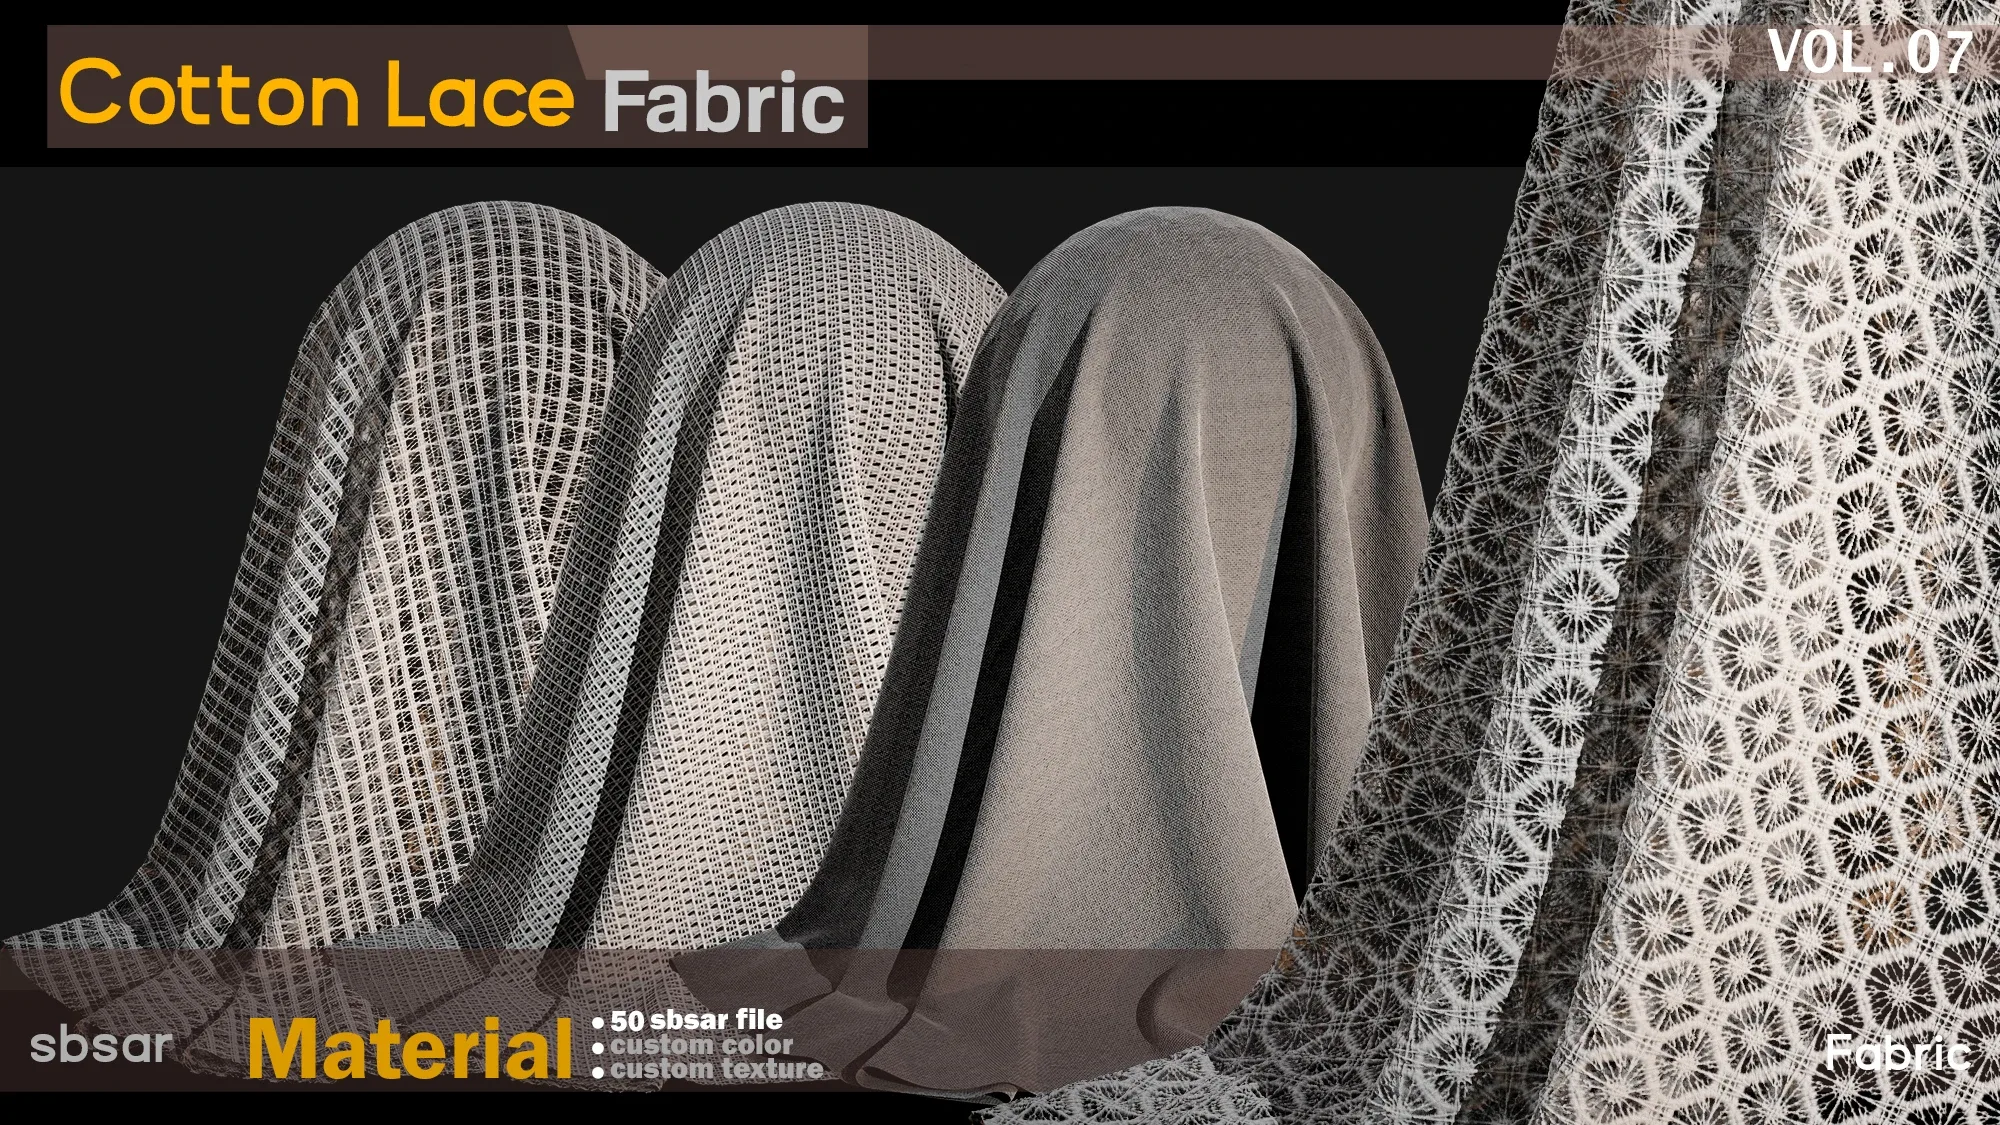 92 Cotton Lace fabric Material -SBSAR -custom color -custom fabric texture -VOL 07